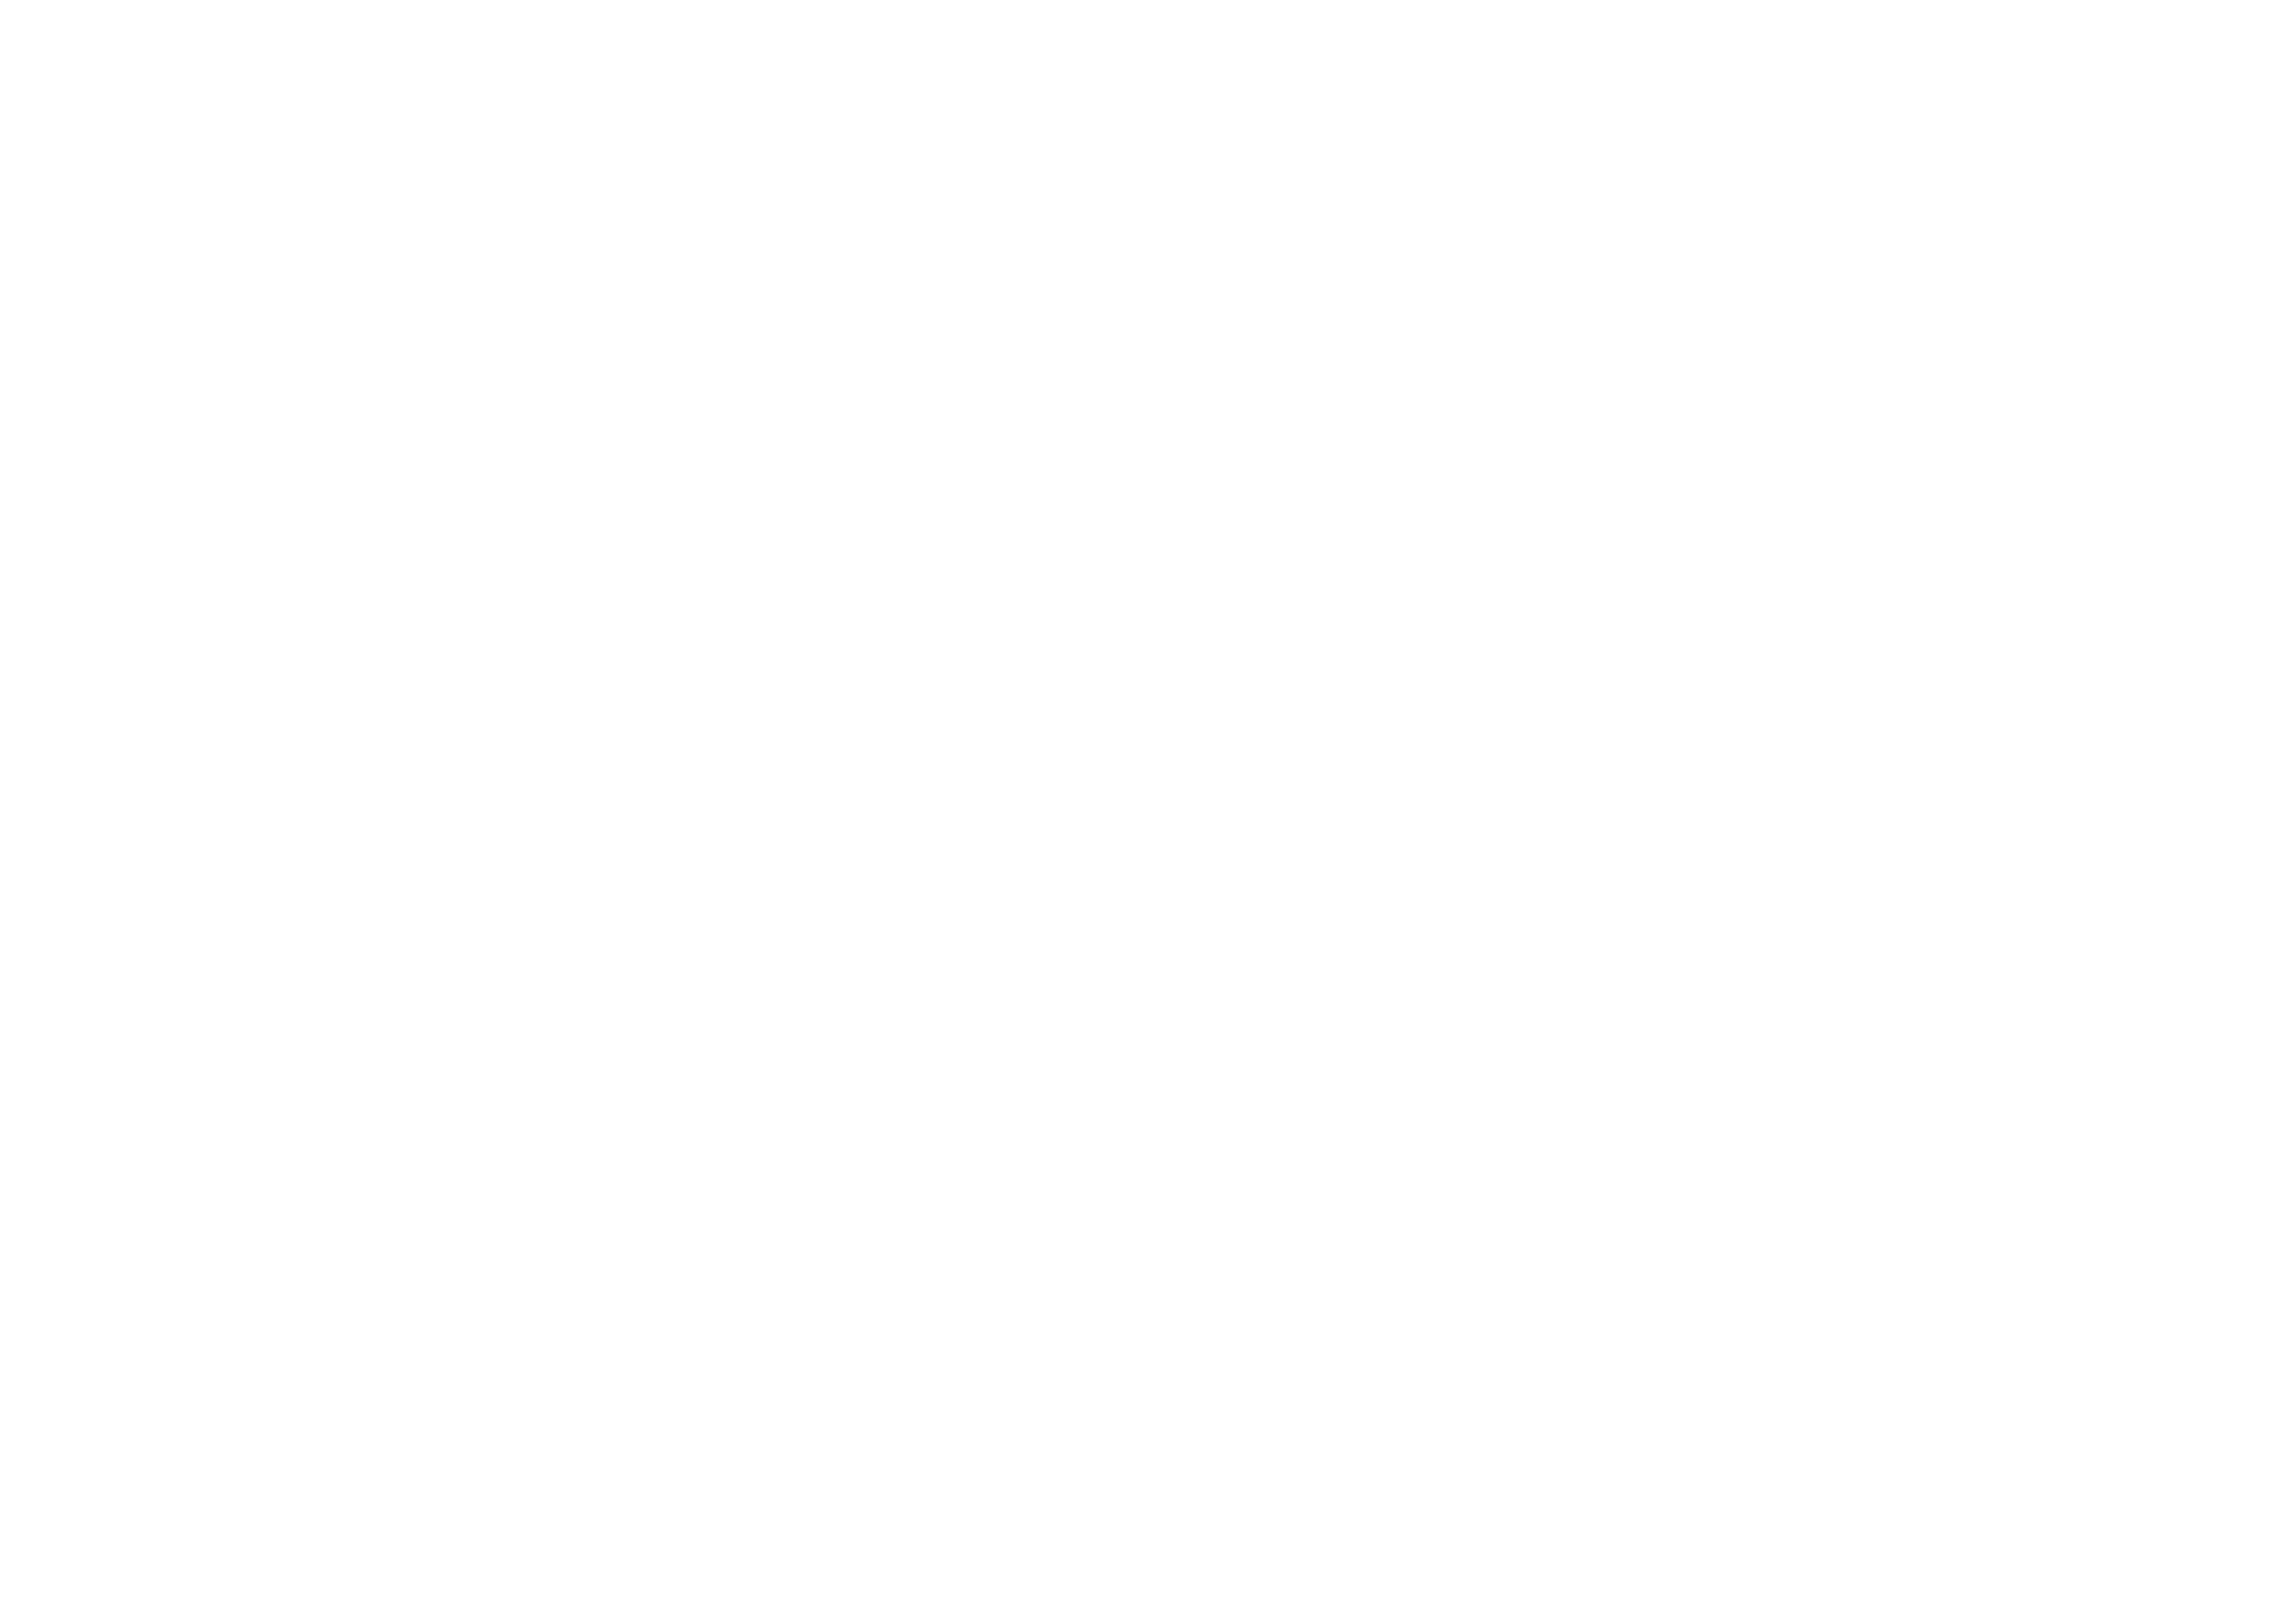 Lisa Perrio